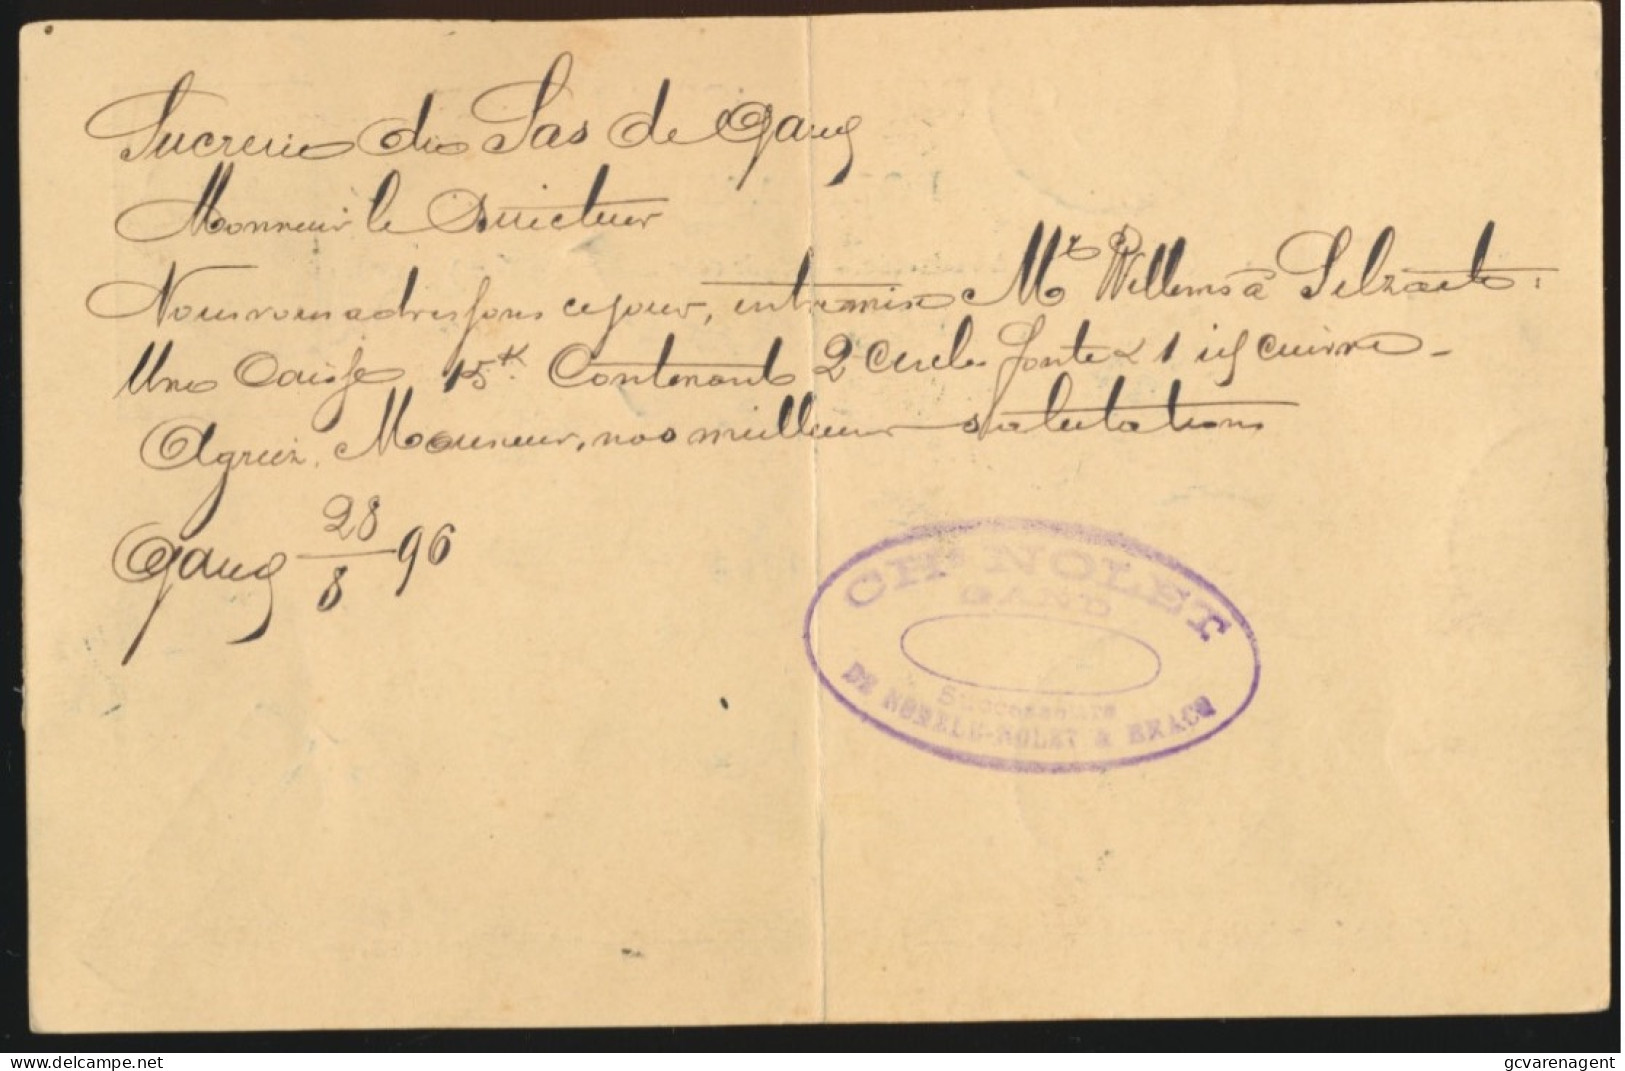 SUPER ZELDZAAM - POSTKAART  GAND STATION 1896 NAAR SAS DE GAND - BELGIESE  EN NEDERLANDSE TAXZEGEL - RETOUR - REBUT ) RE - Briefkaarten 1871-1909